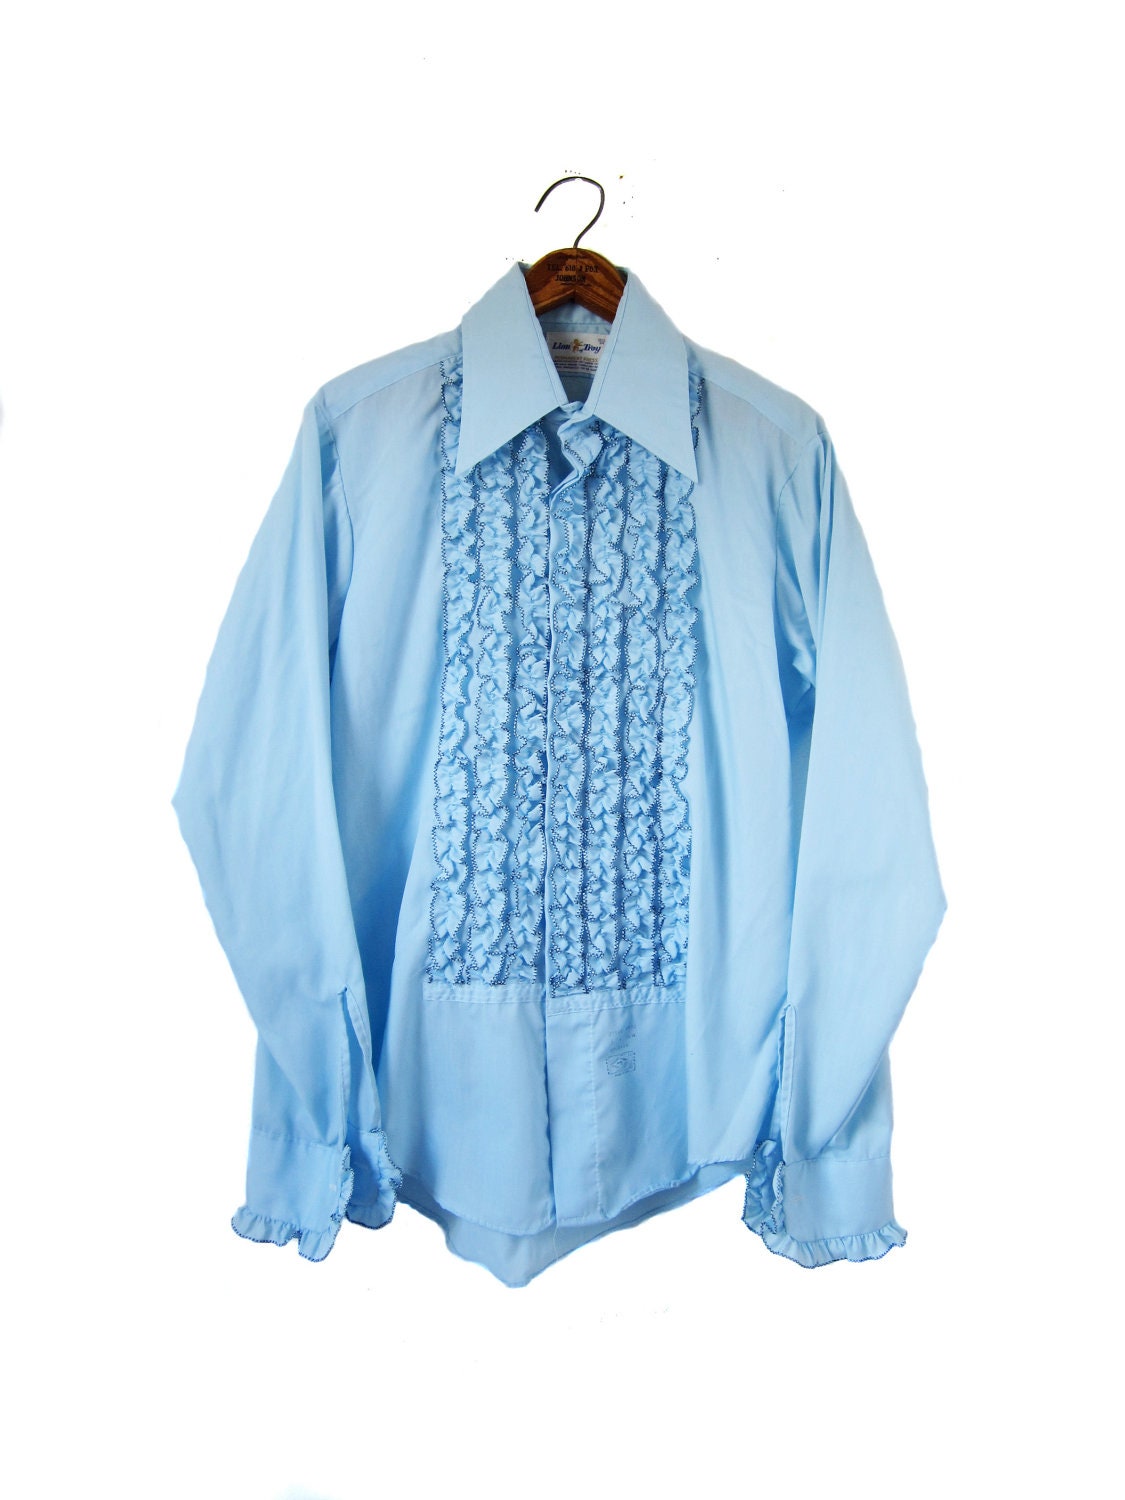 Vintage 1960s Ruffle Tuxedo Dress Shirt Powder Blue